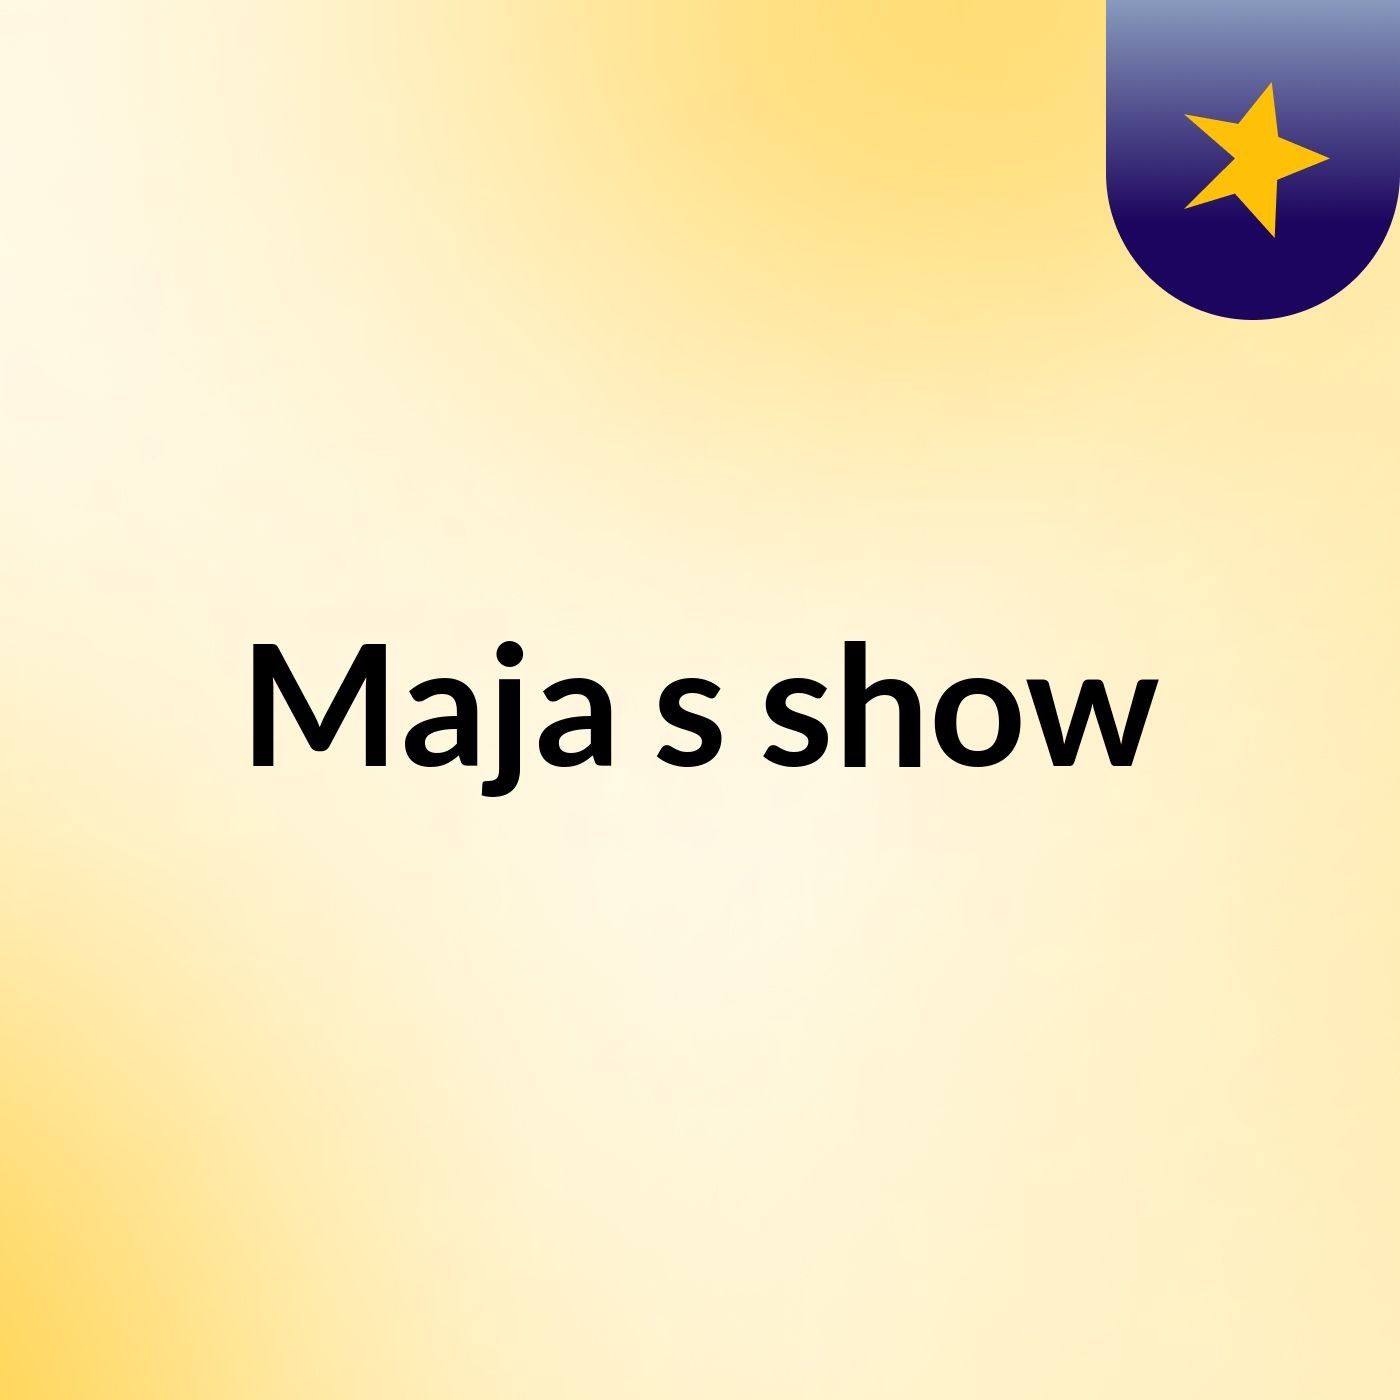 Maja's show